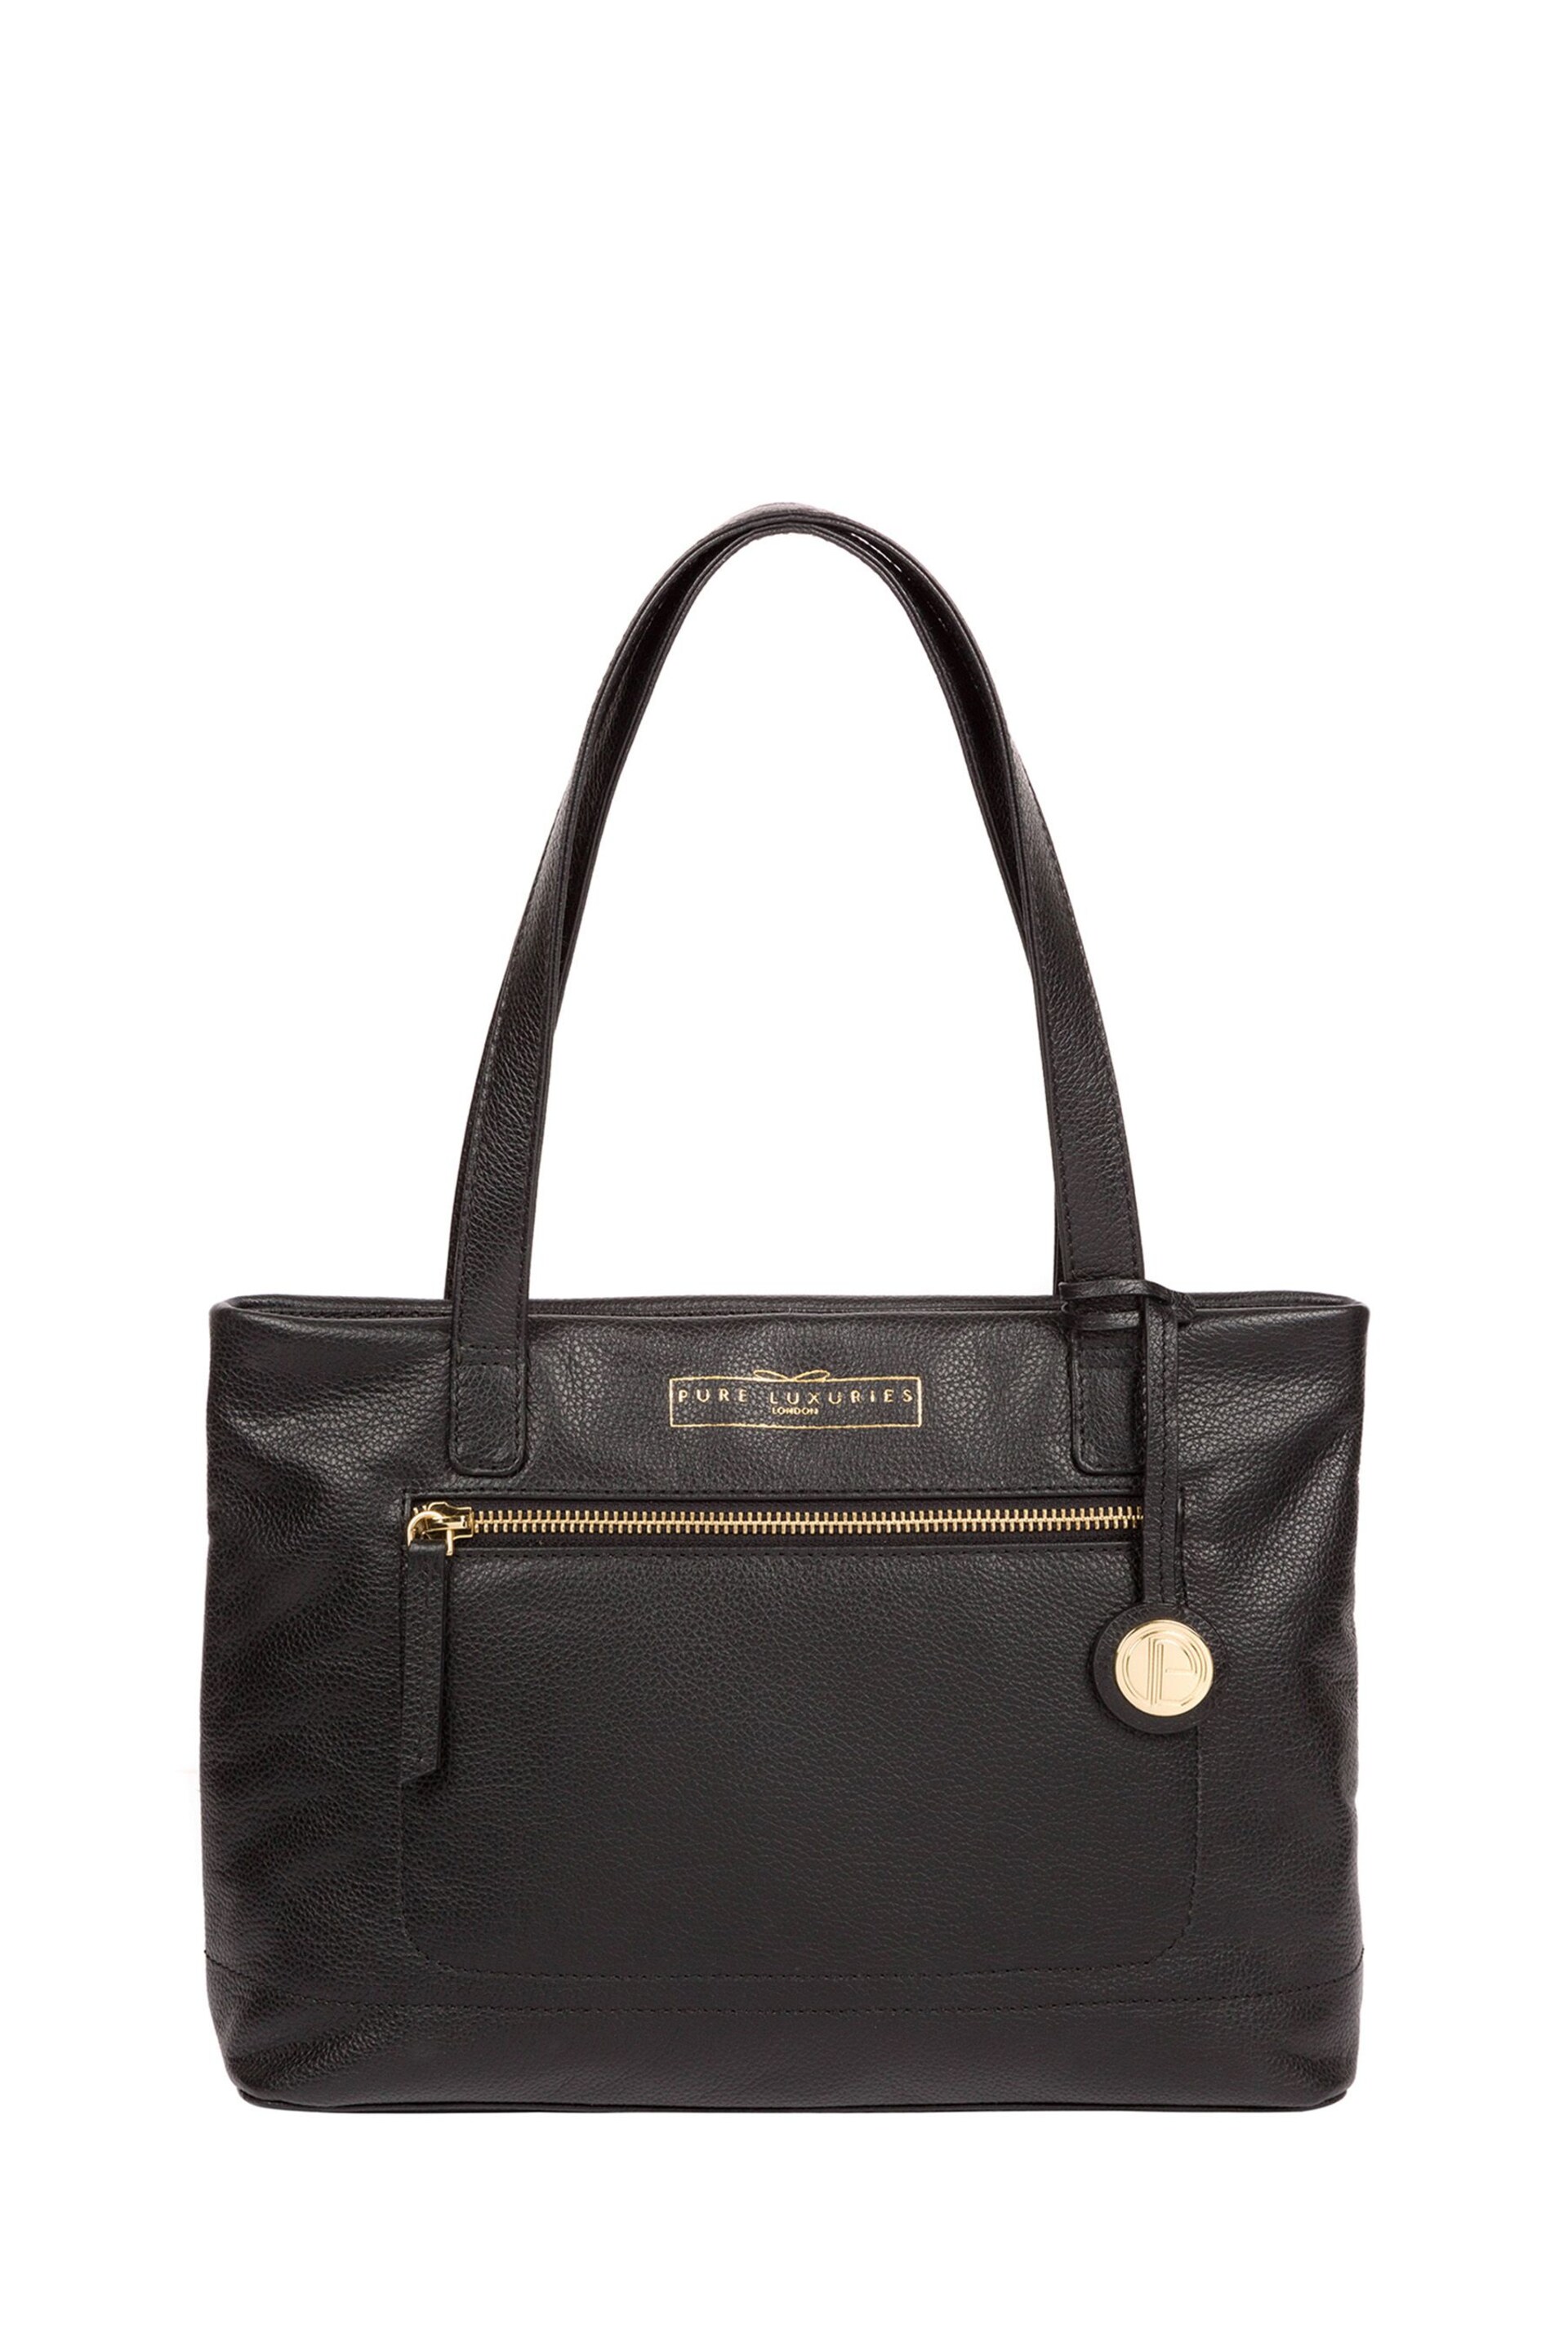 Pure Luxuries London Adley Leather Handbag - Image 2 of 5